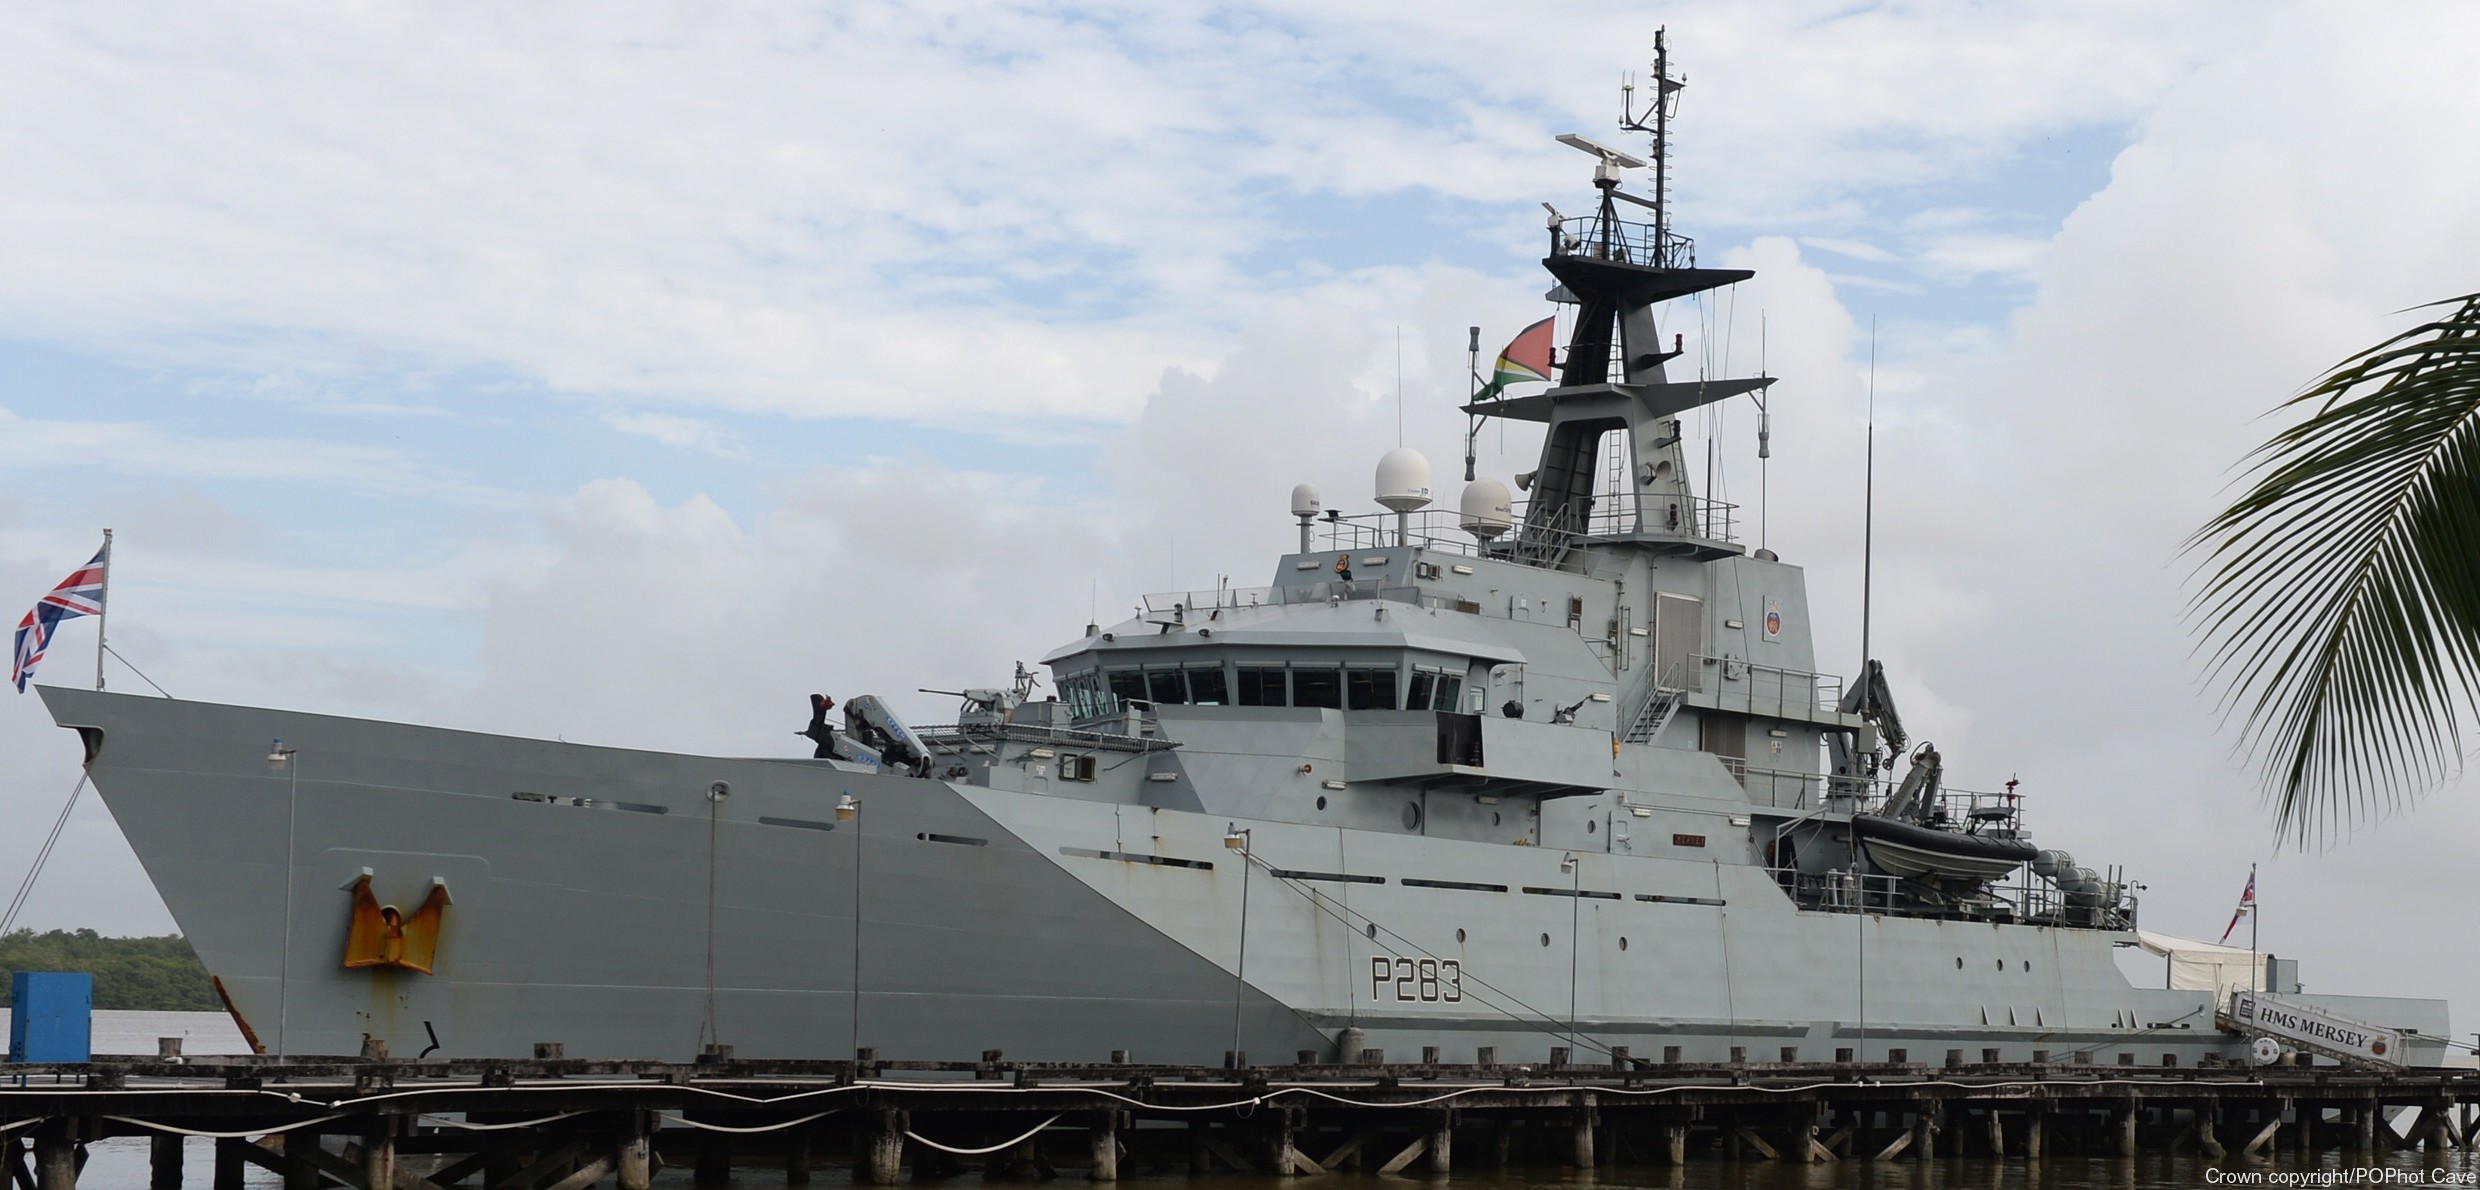 p-283 hms mersey river class offshore patrol vessel opv royal navy 09x vosper thornycroft